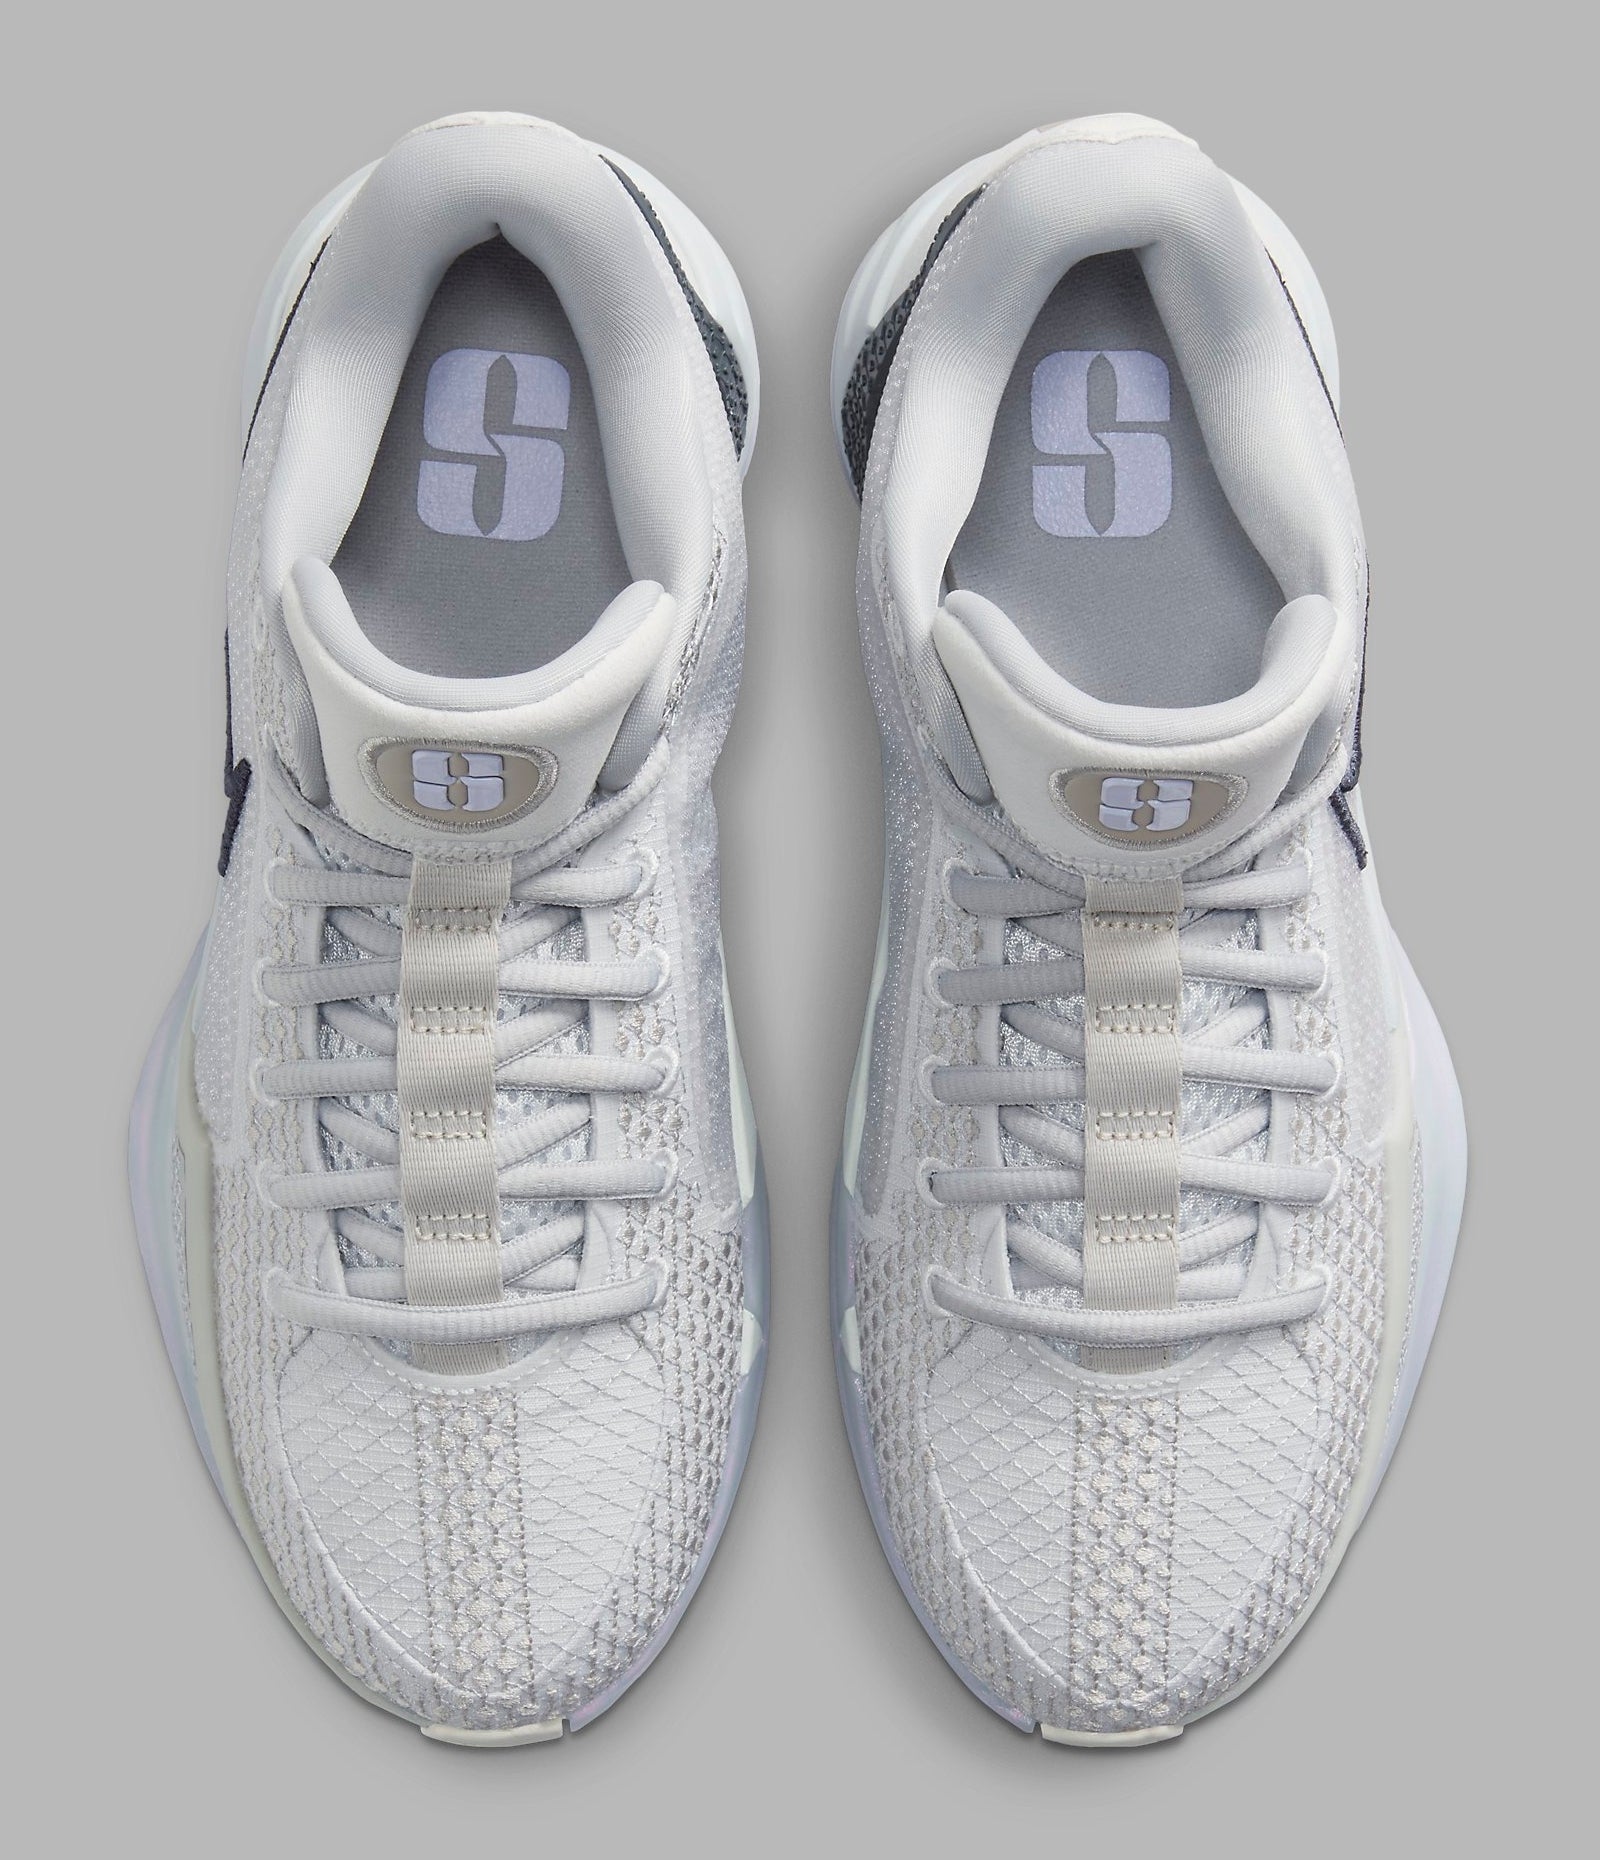 Nike unveils Sabrina Ionescu's signature shoe line 